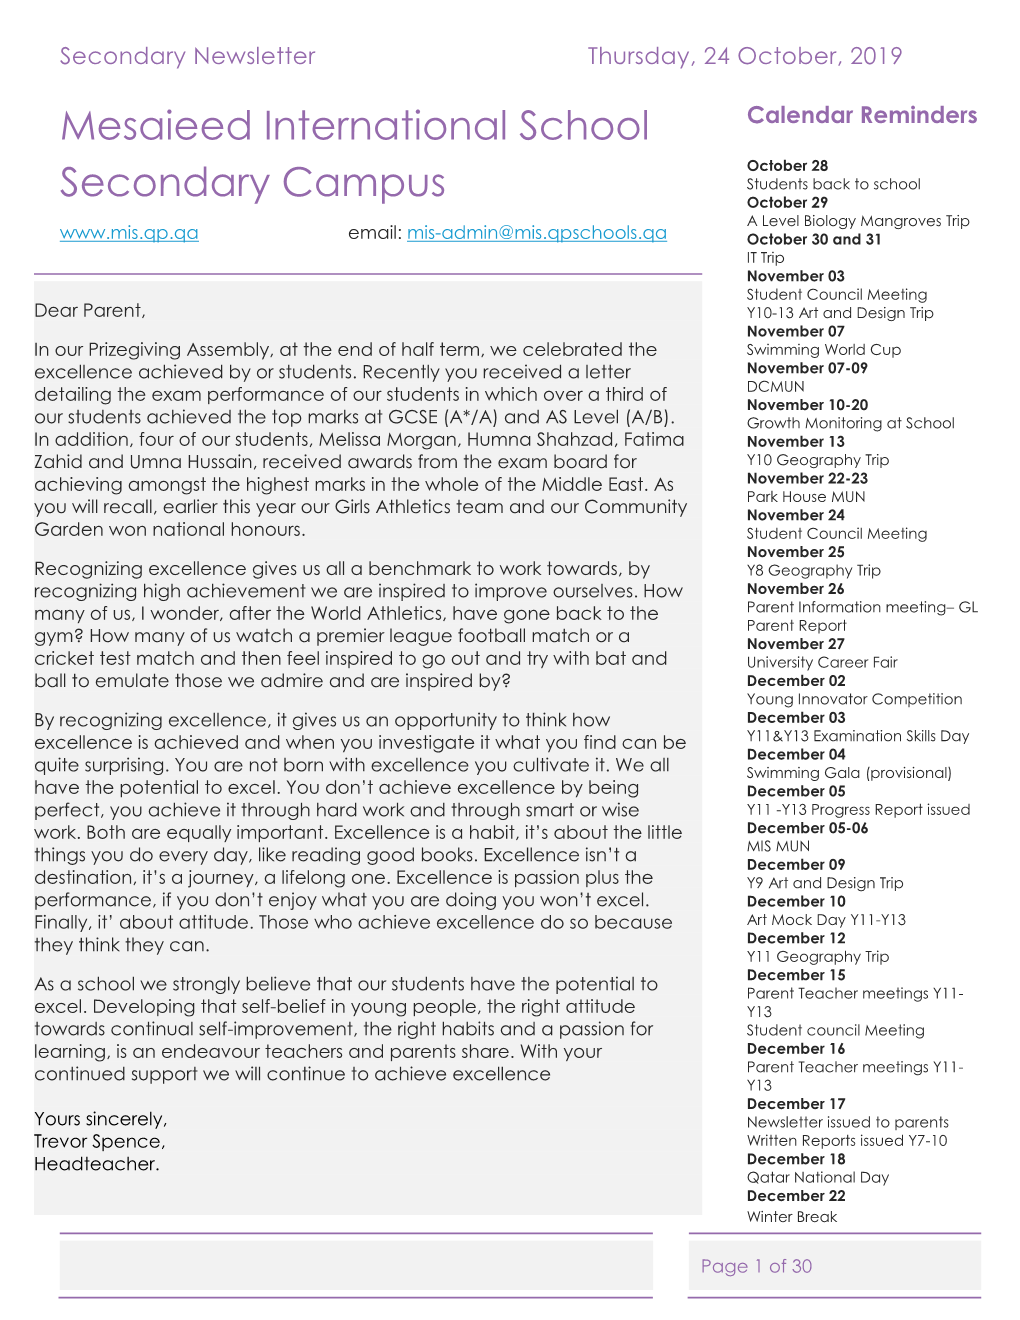 Secondary Newsletter Oct 2019.Pdf